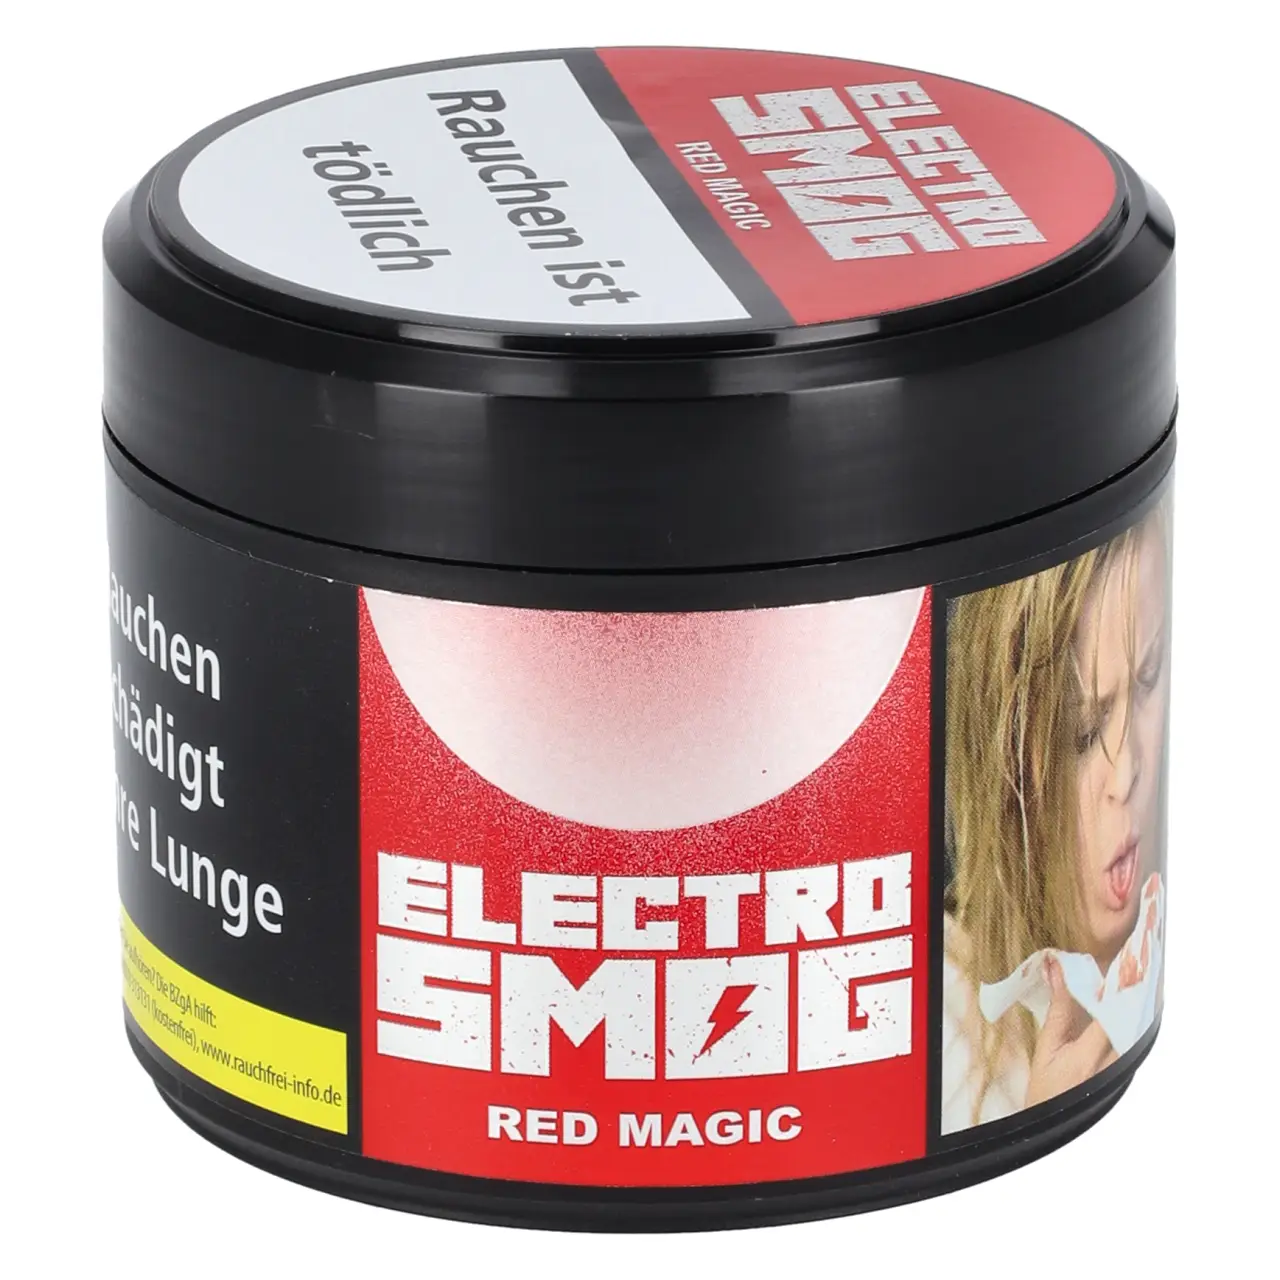 Electro Smog Red Magic Shisha Tabak in der 200g Dose